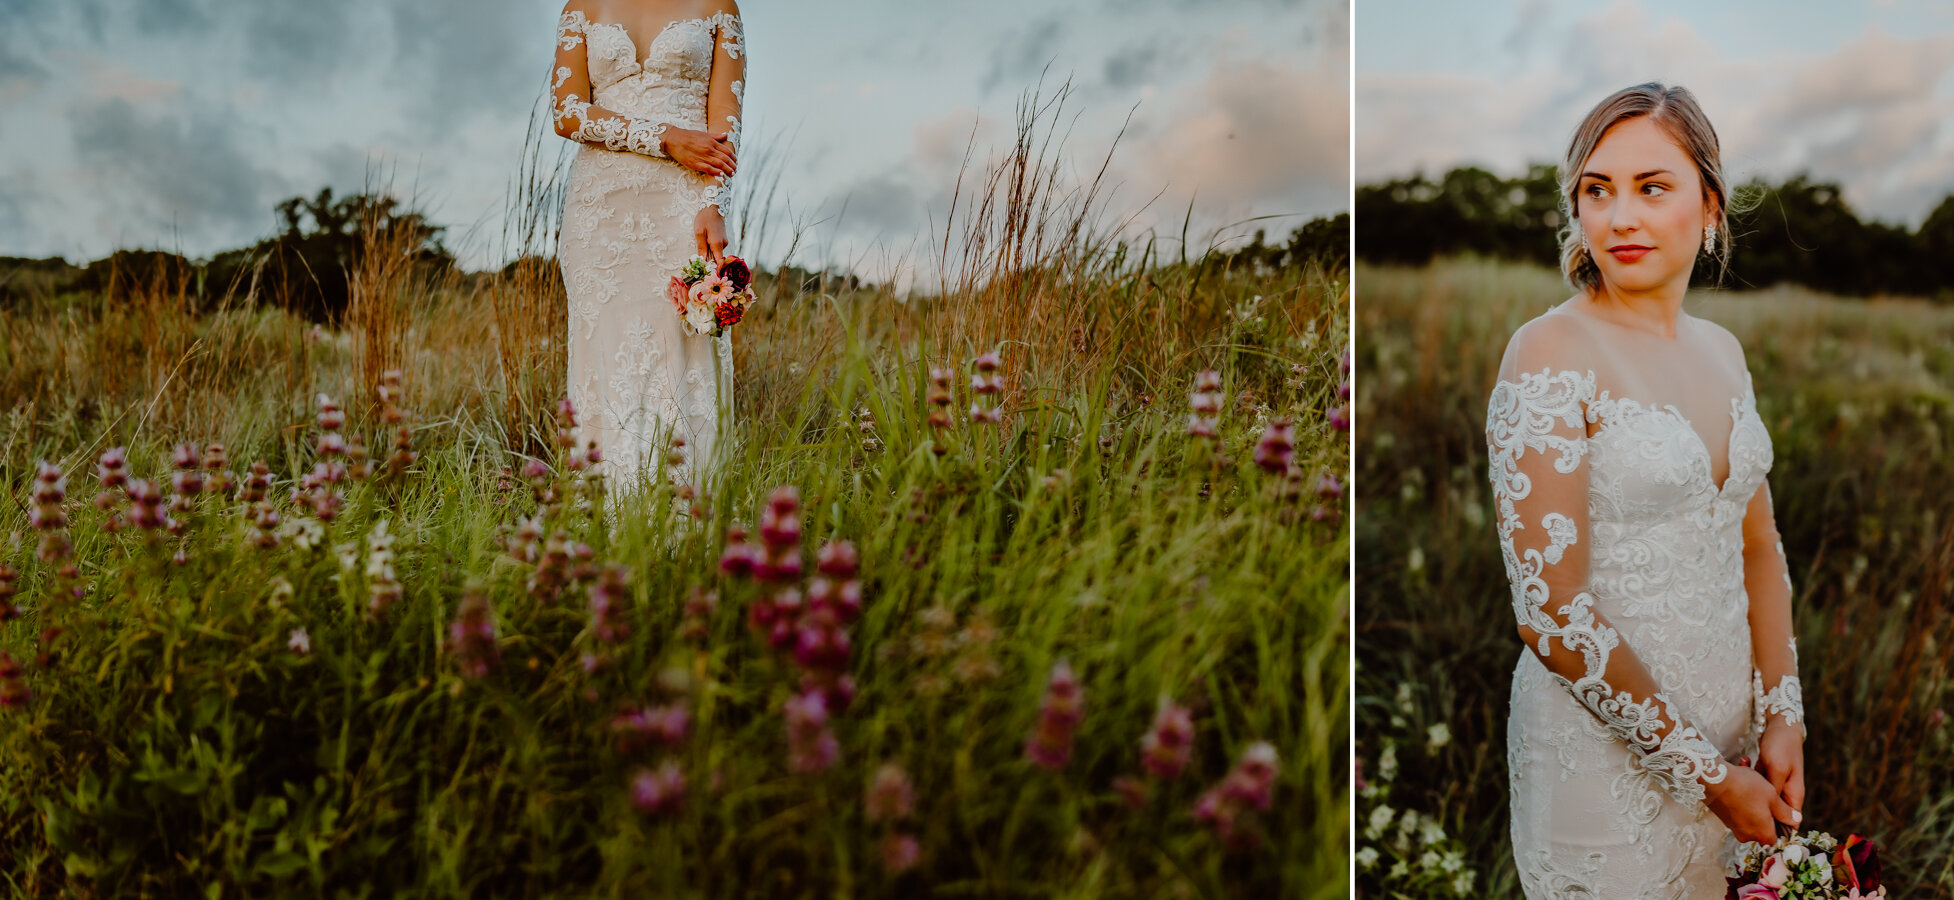 bride portraits in field in austin texas